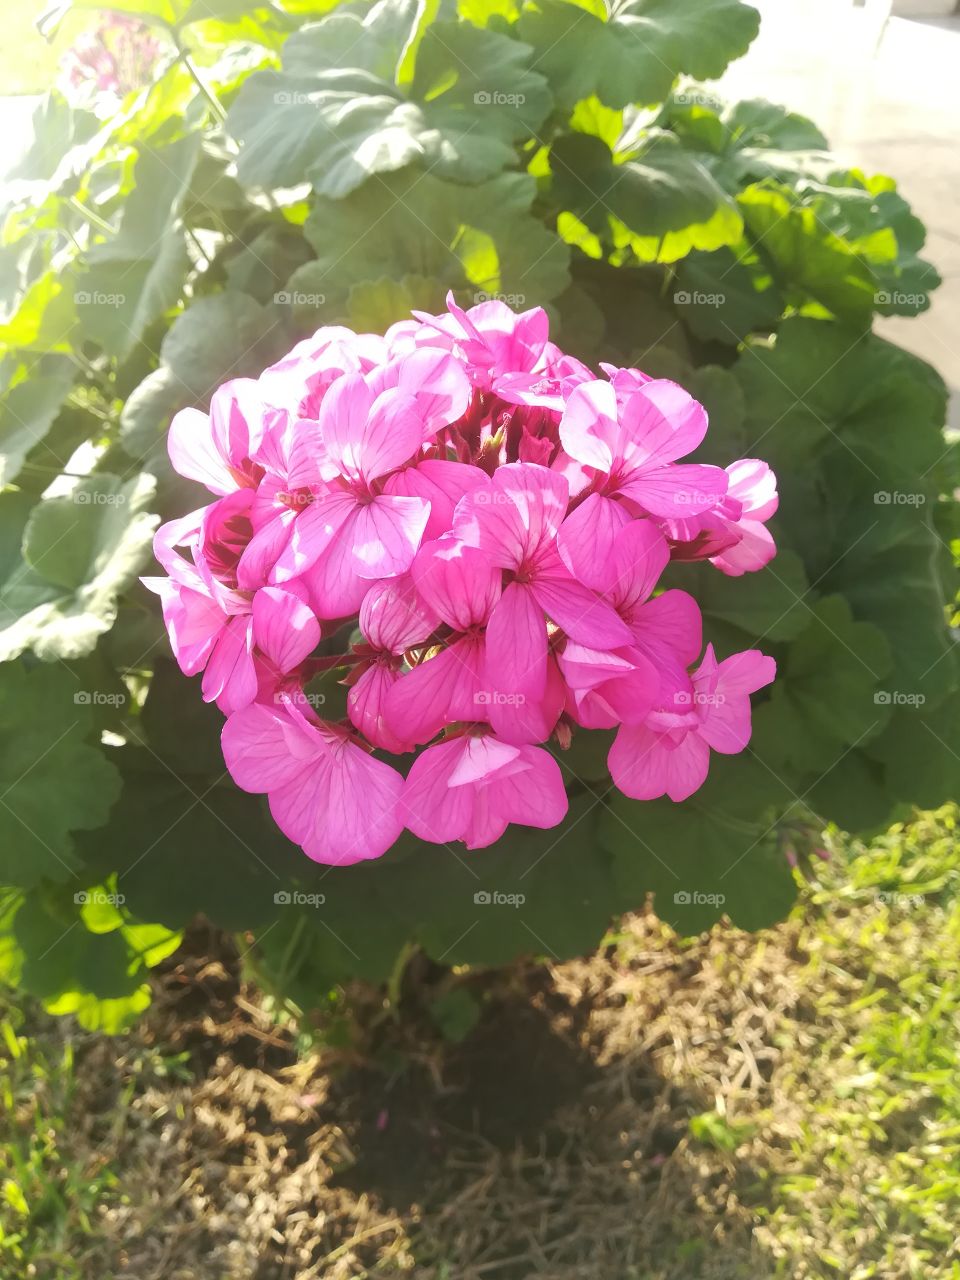 Preciosa flor